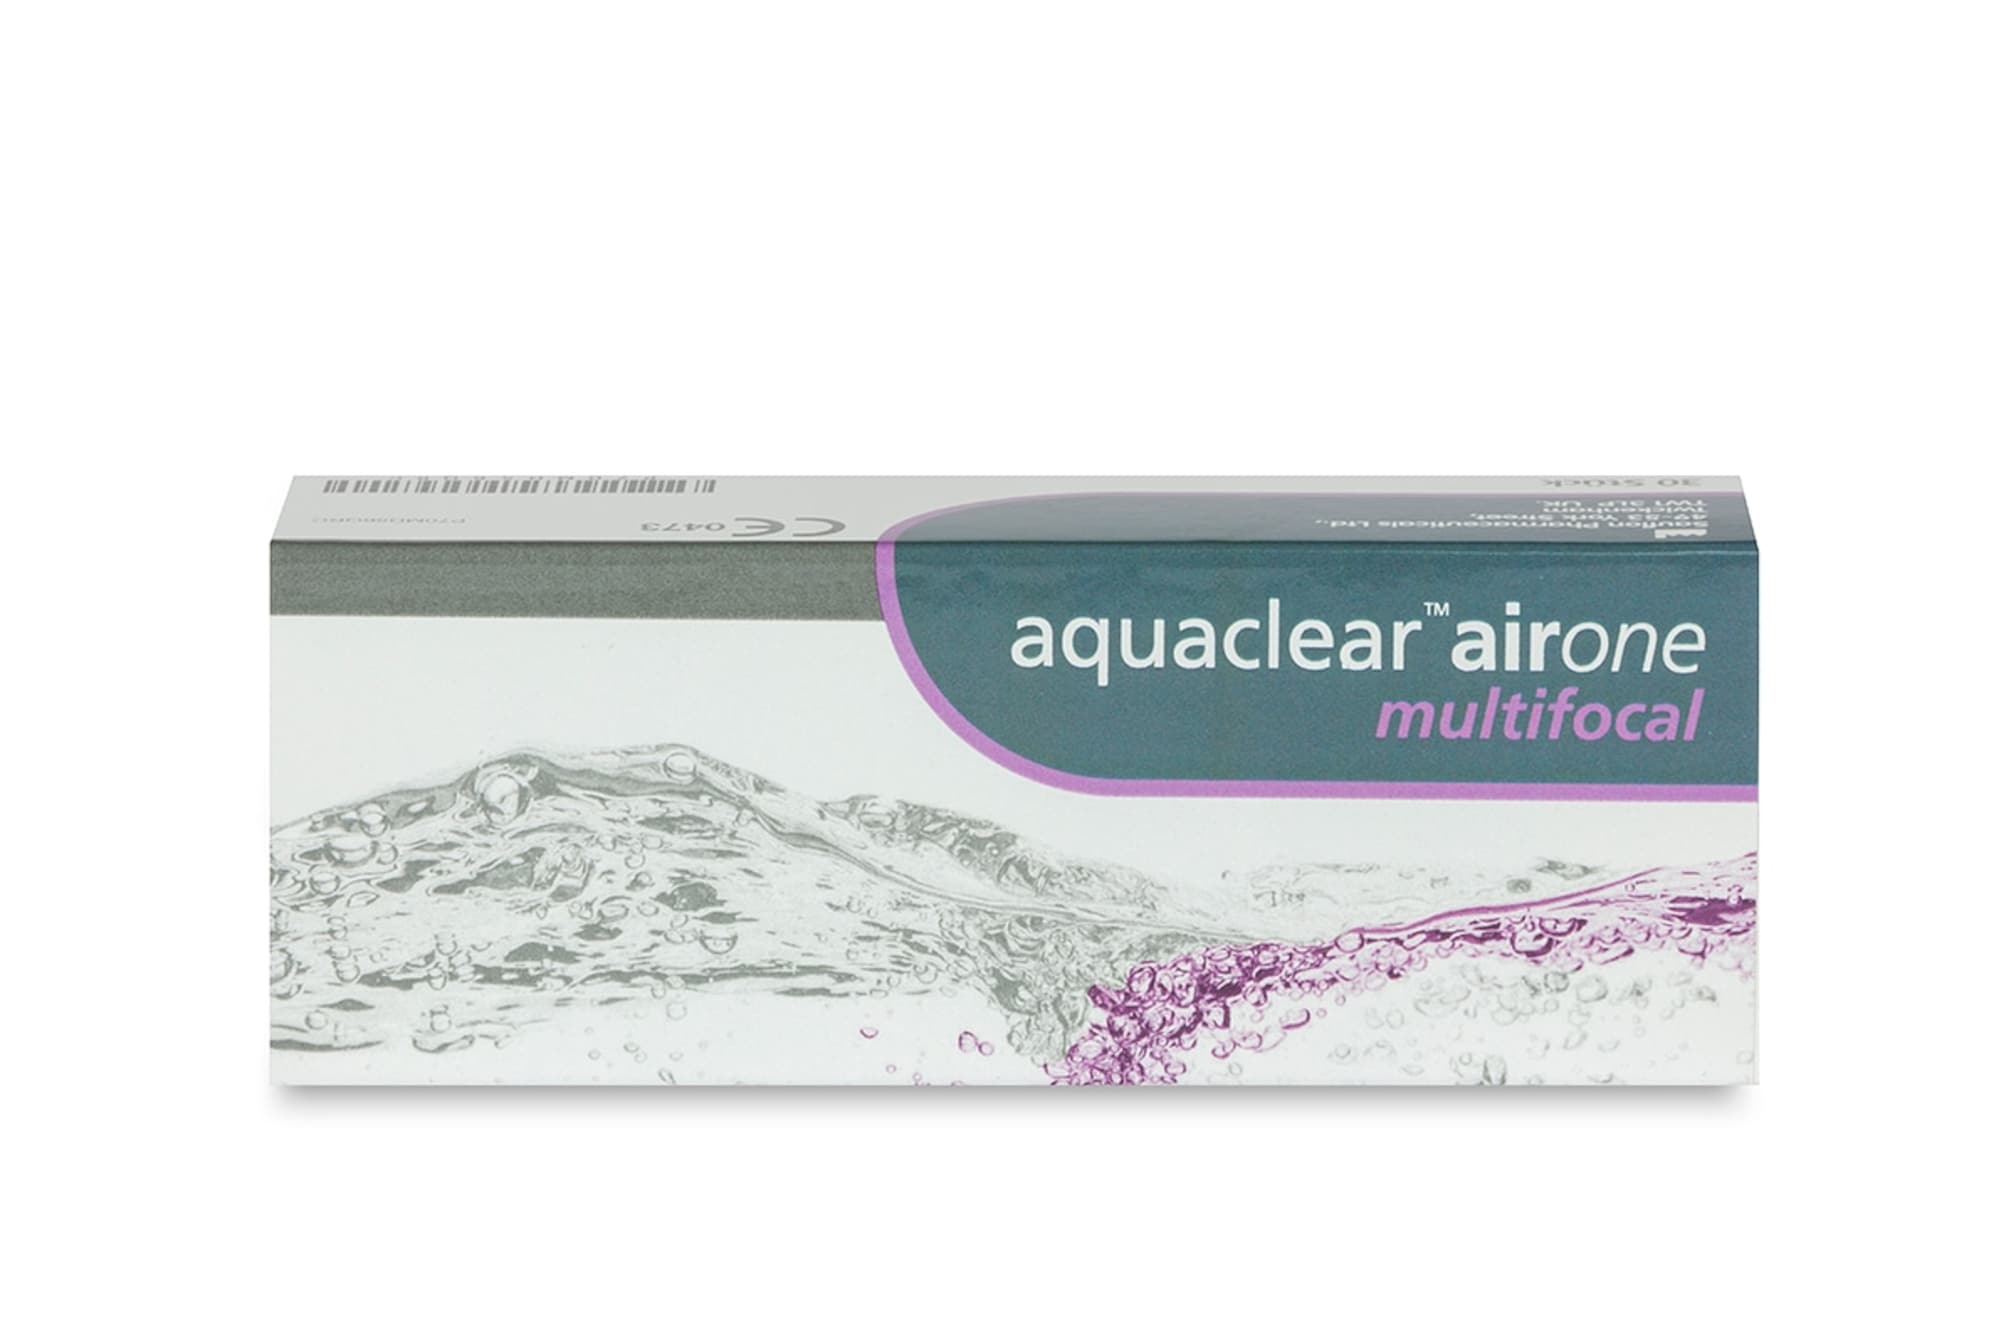 Aquaclear airOne multifocal